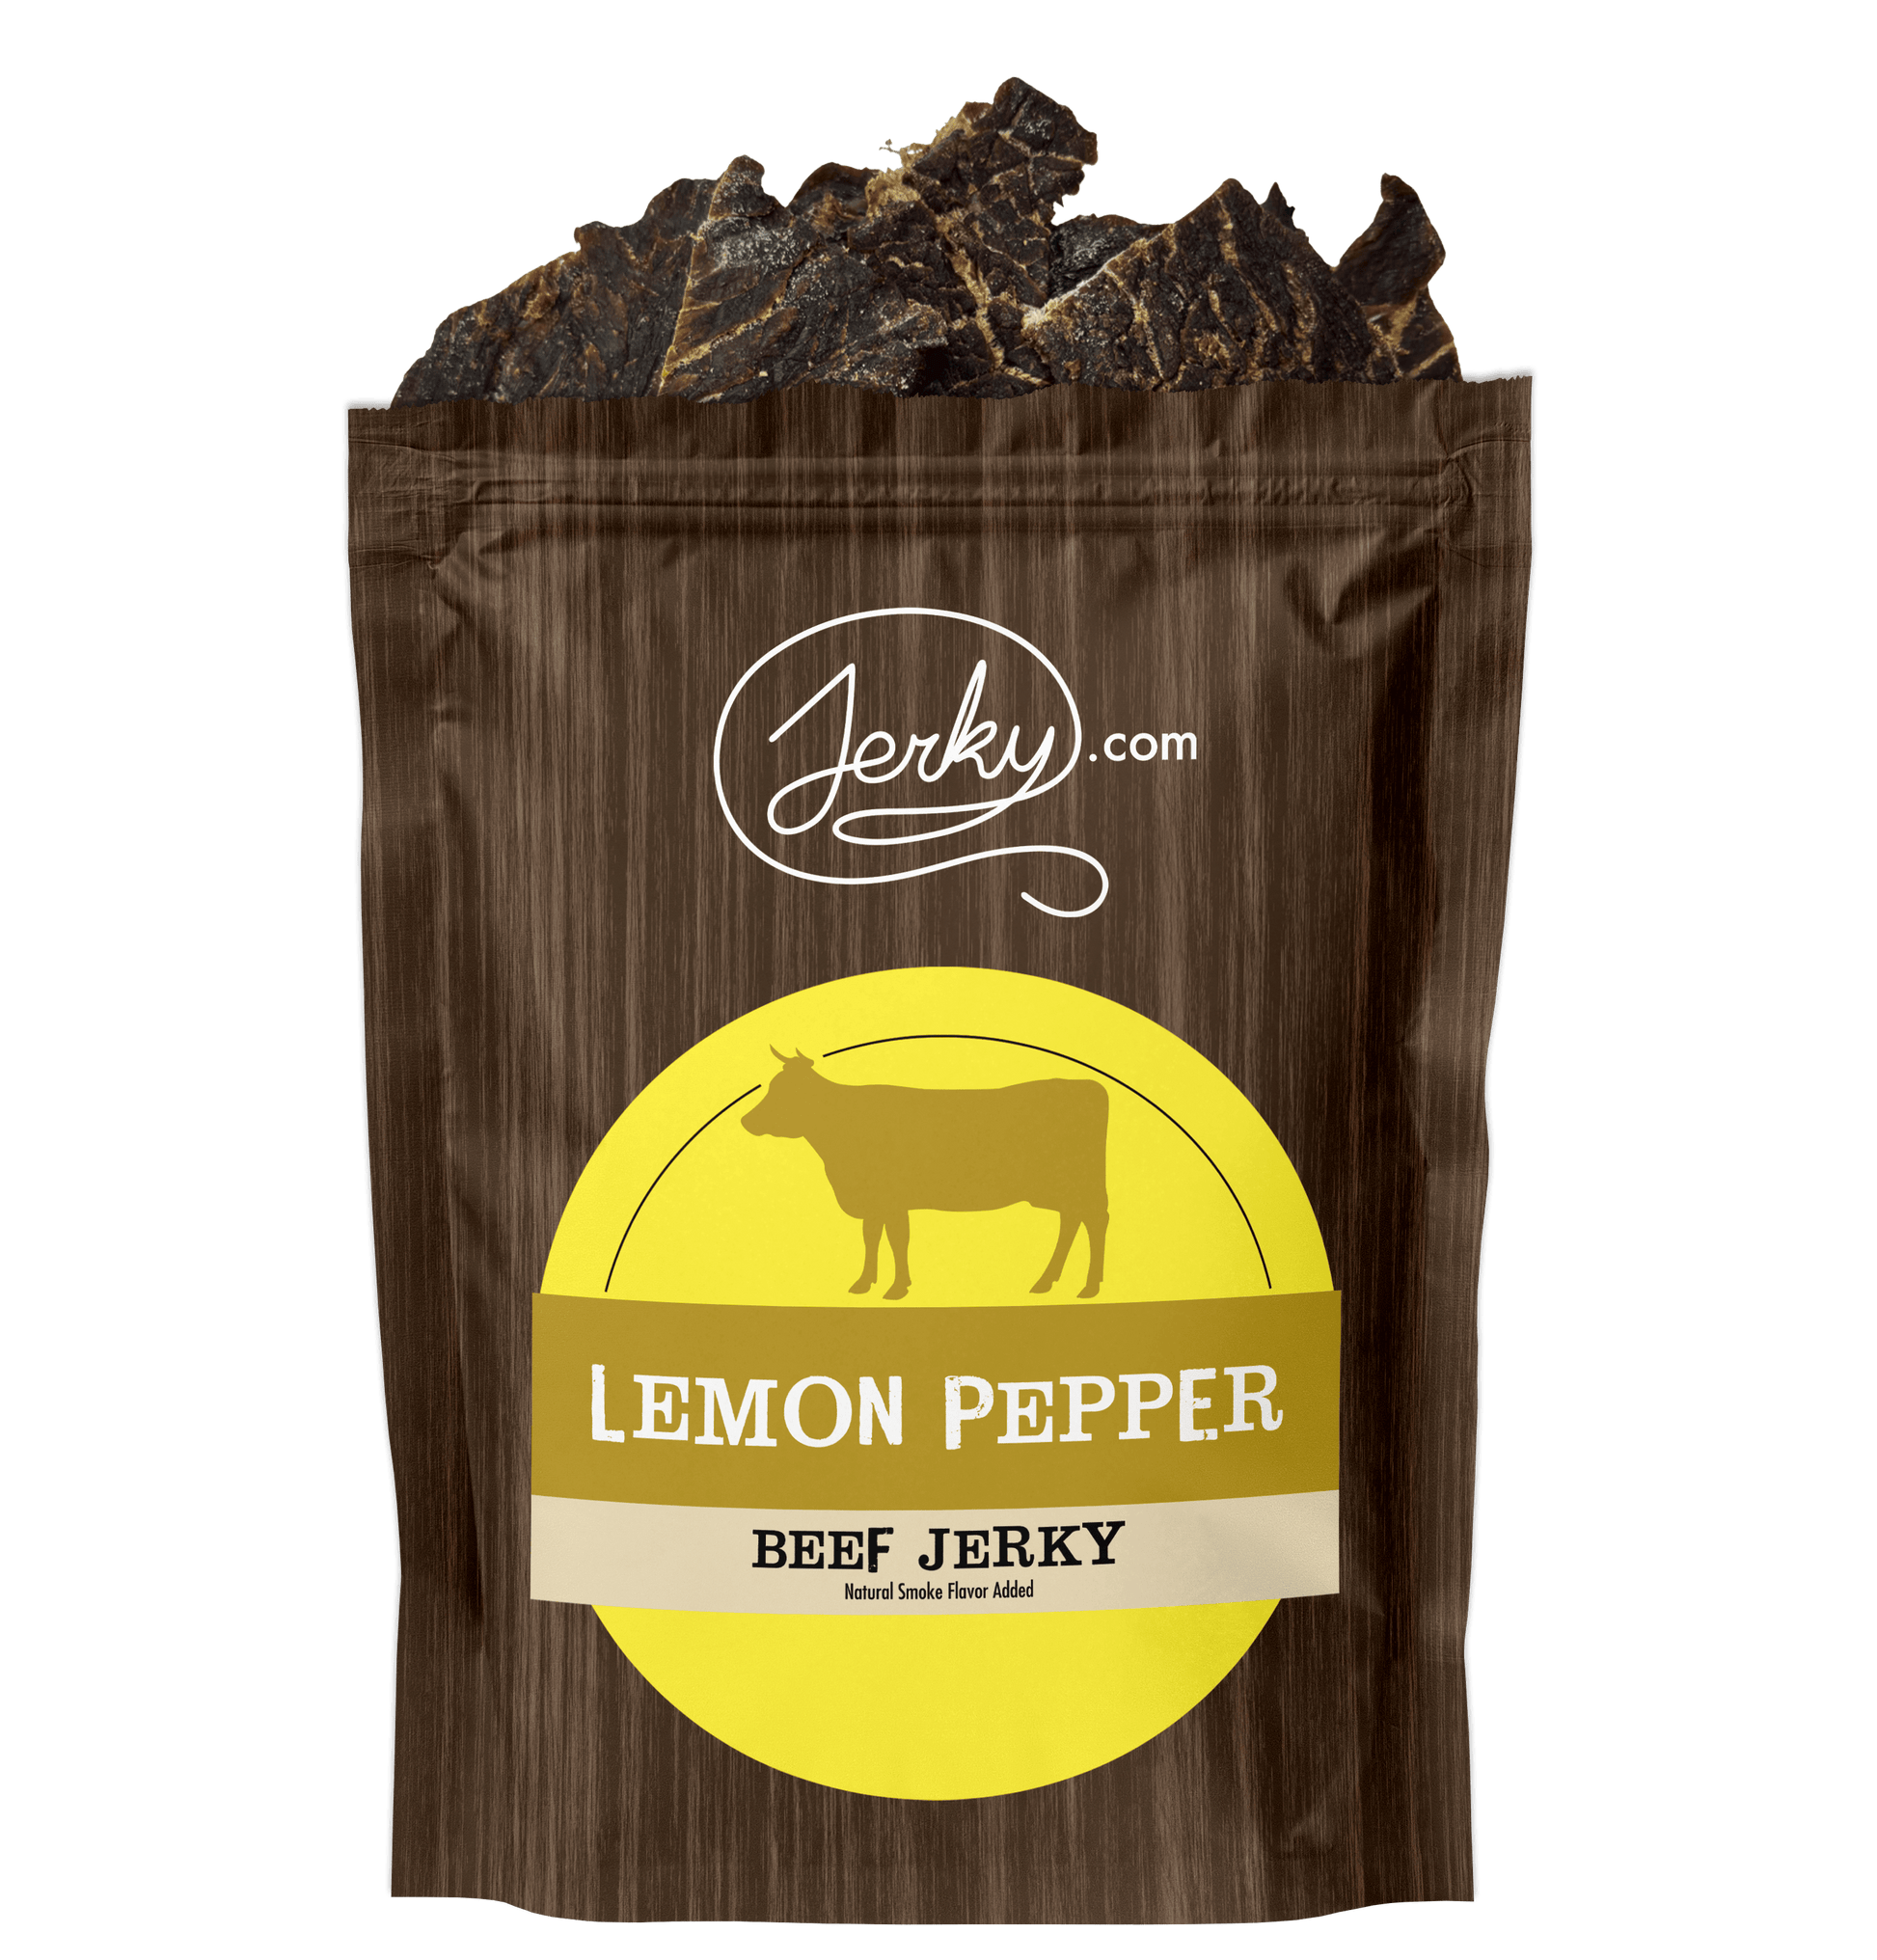 All-Natural Beef Jerky - Lemon Pepper by Jerky.com